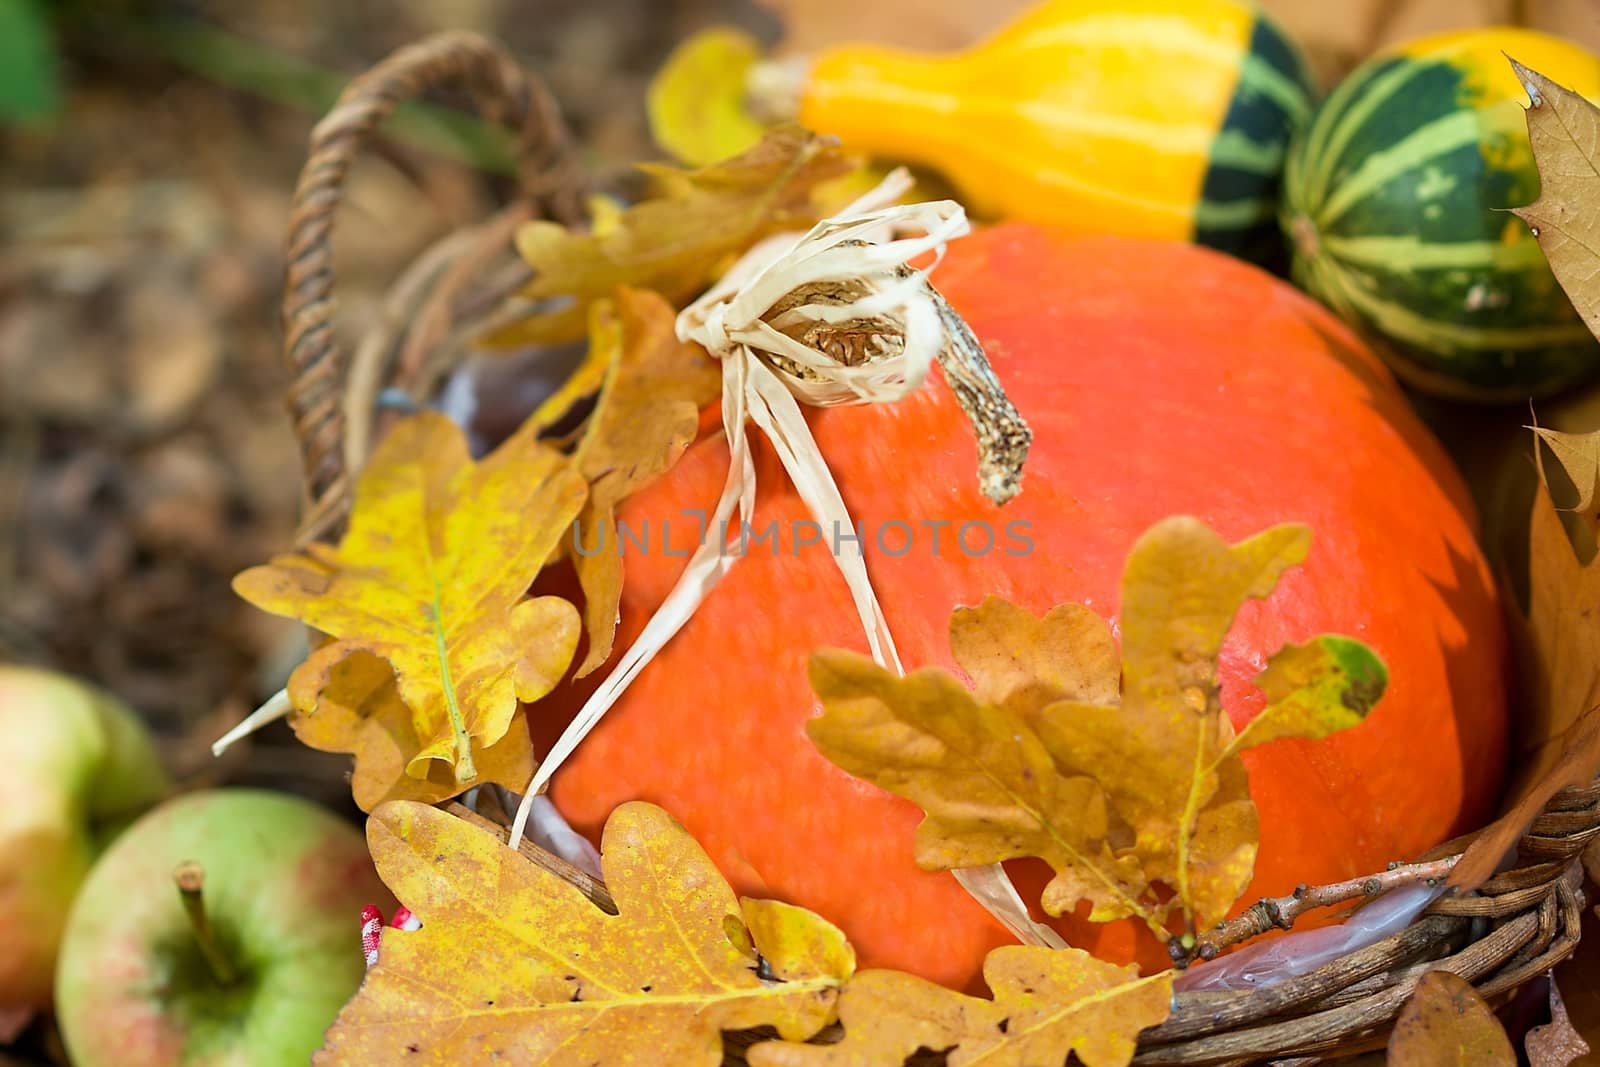 Autumn vegetable close-up by Dermot68